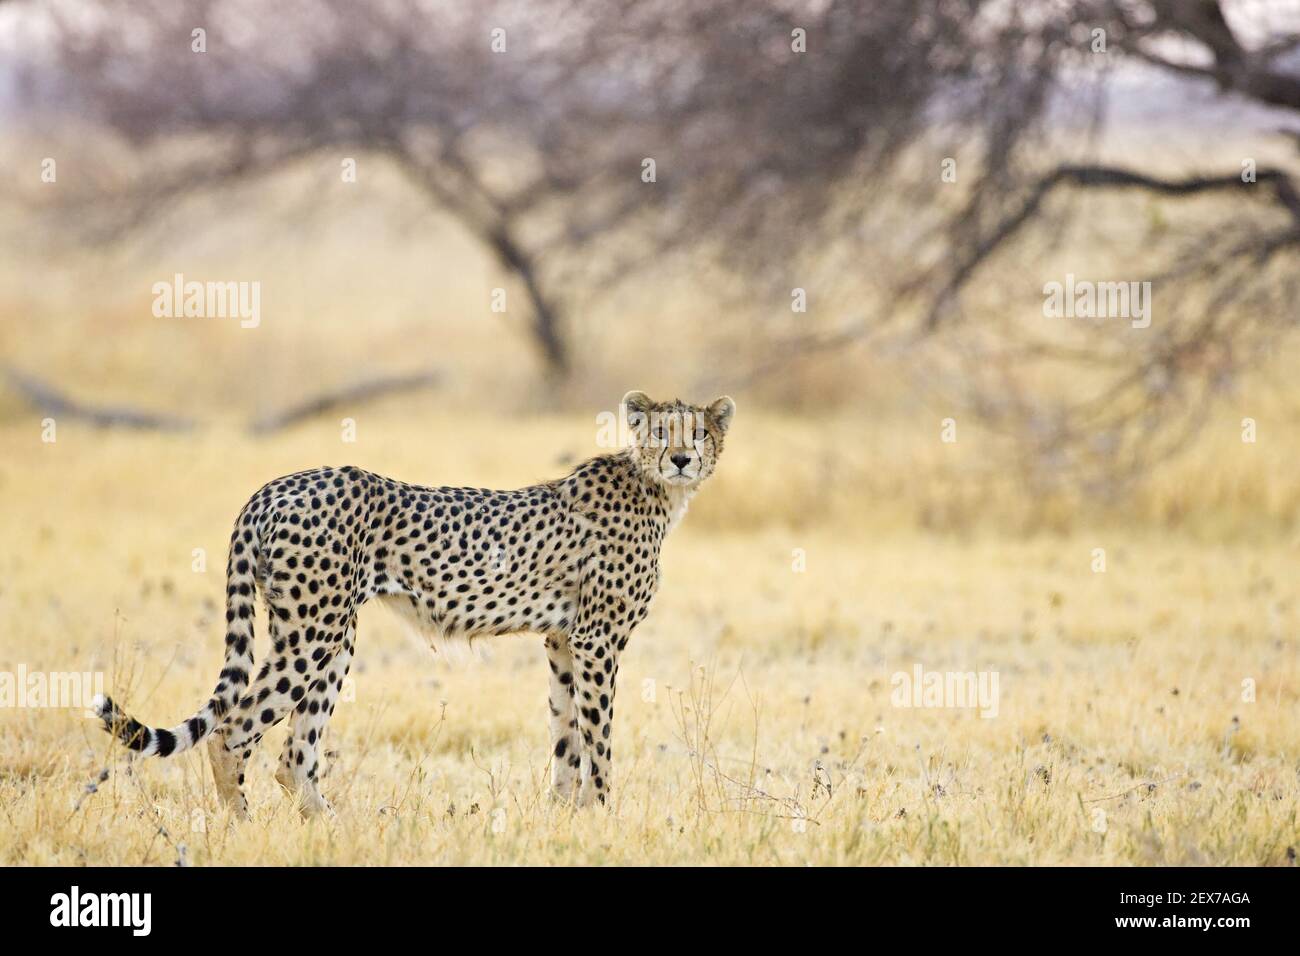 Gepard (Acinonyx jubatus) am fruehen Morgen, Nxai Pan, parc national Makgadikgadi pans, Botswana, Afrika, Cheetah au lig du matin Banque D'Images